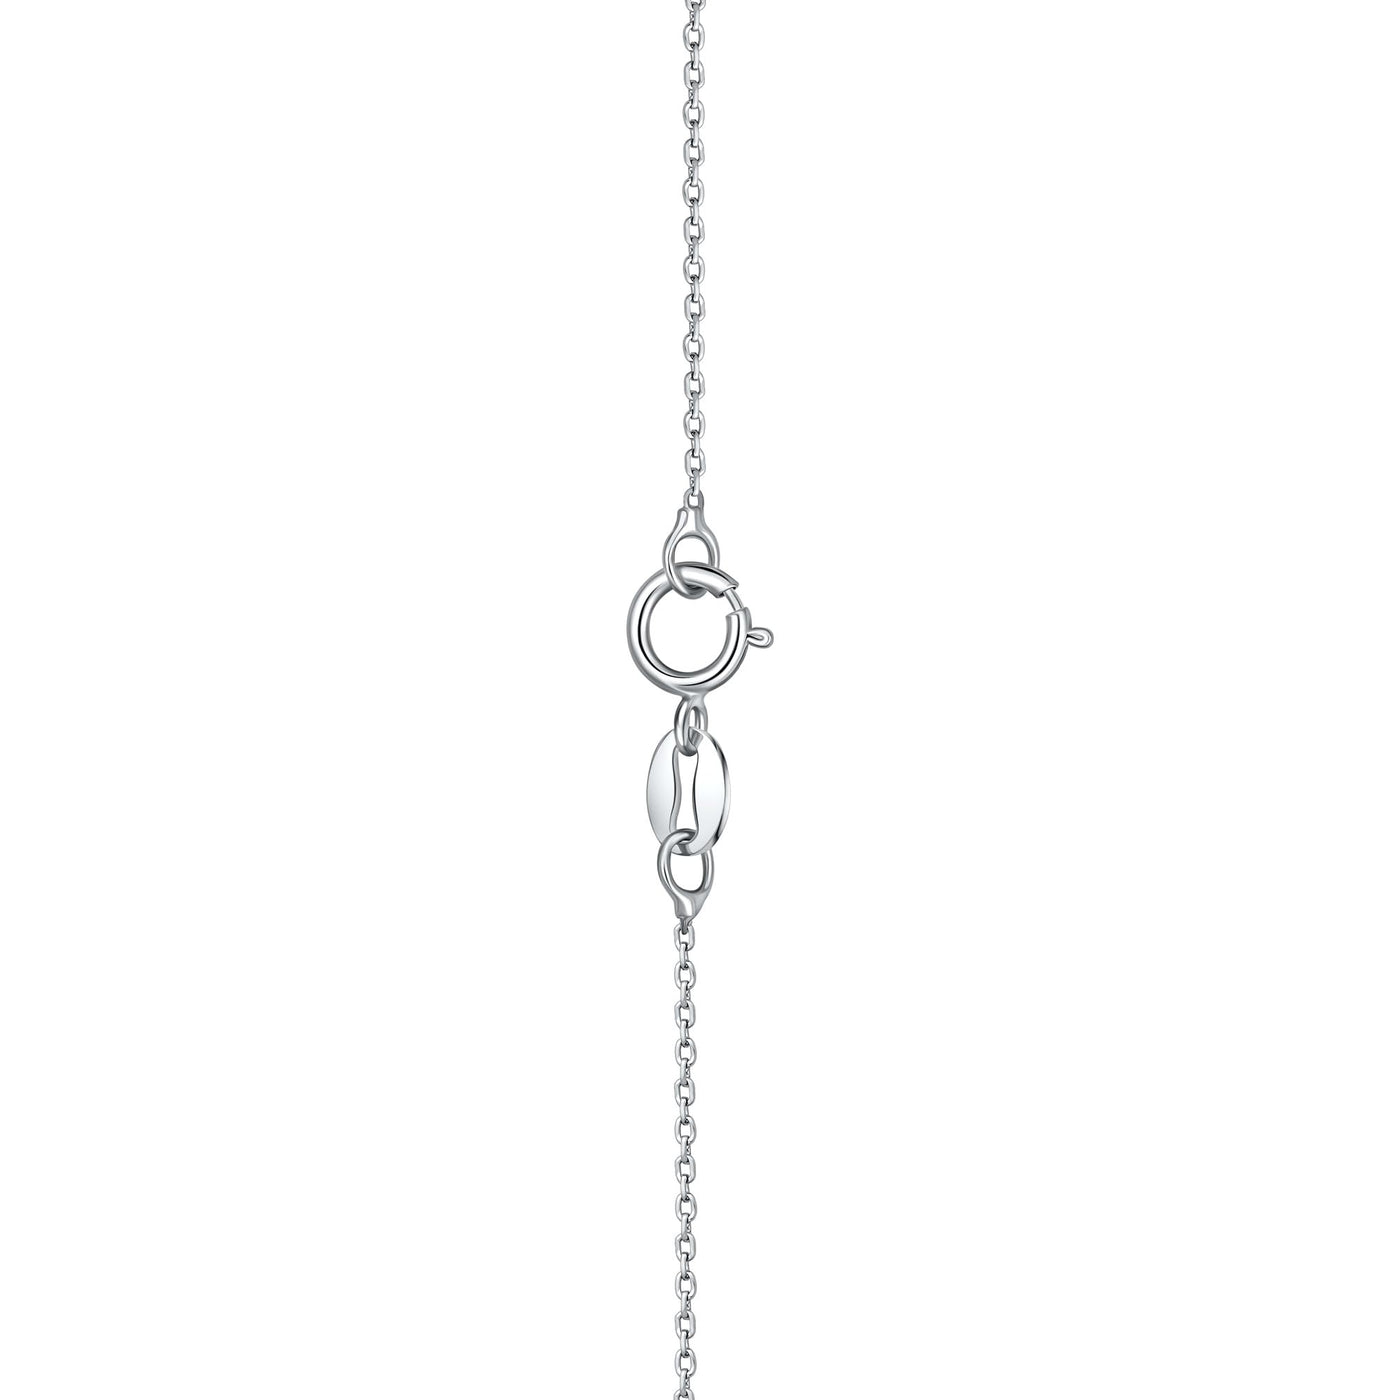 Sterling Silver Brilliant Halo Pendant Necklace - All Birthstone Colors